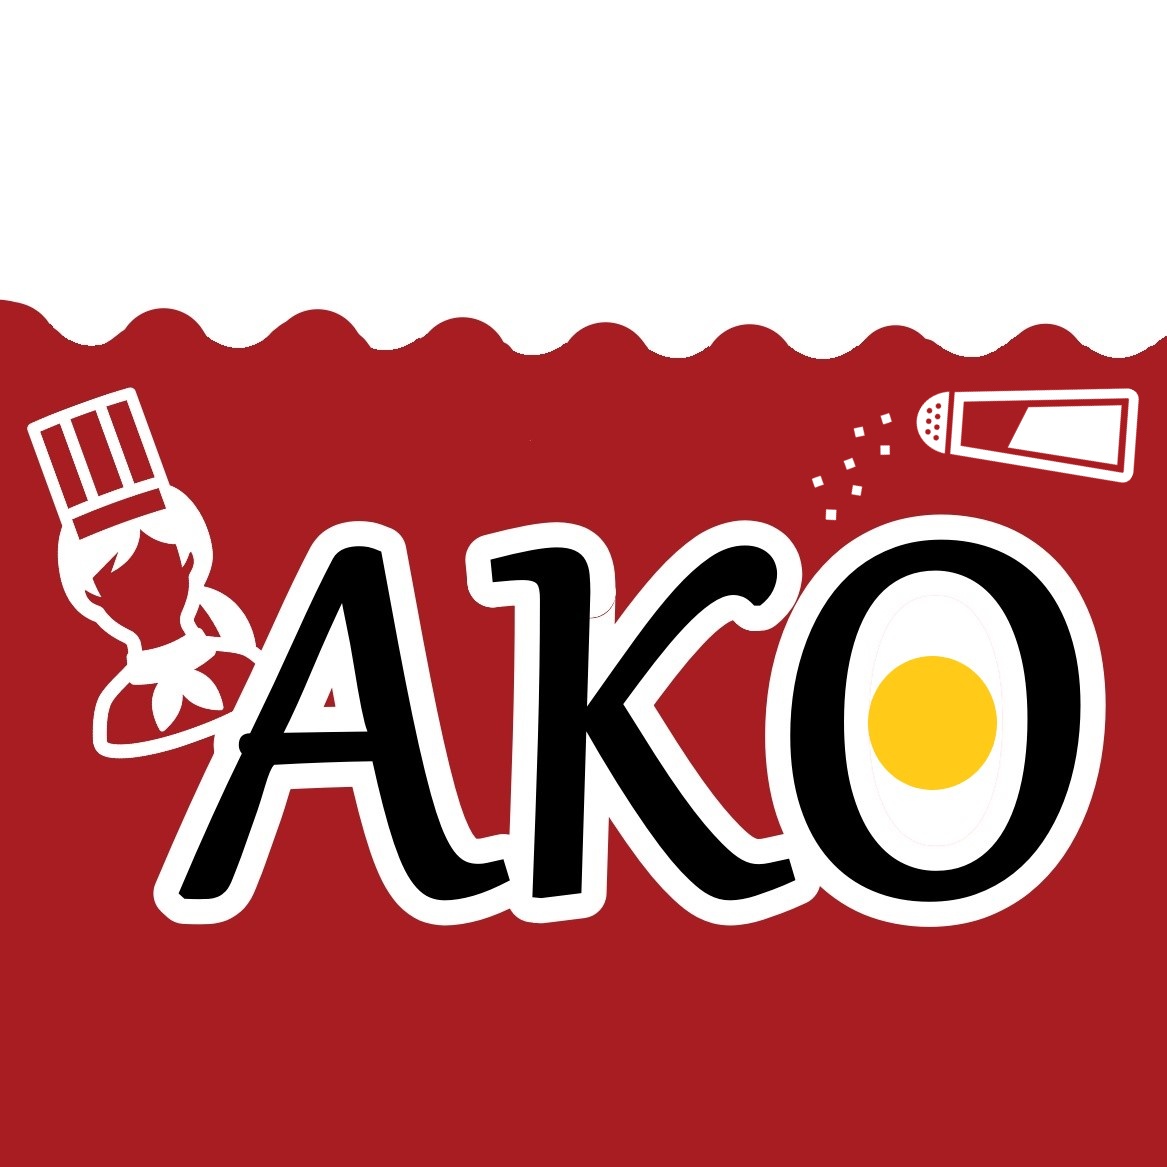 Welcome to AKO’s CookBook!